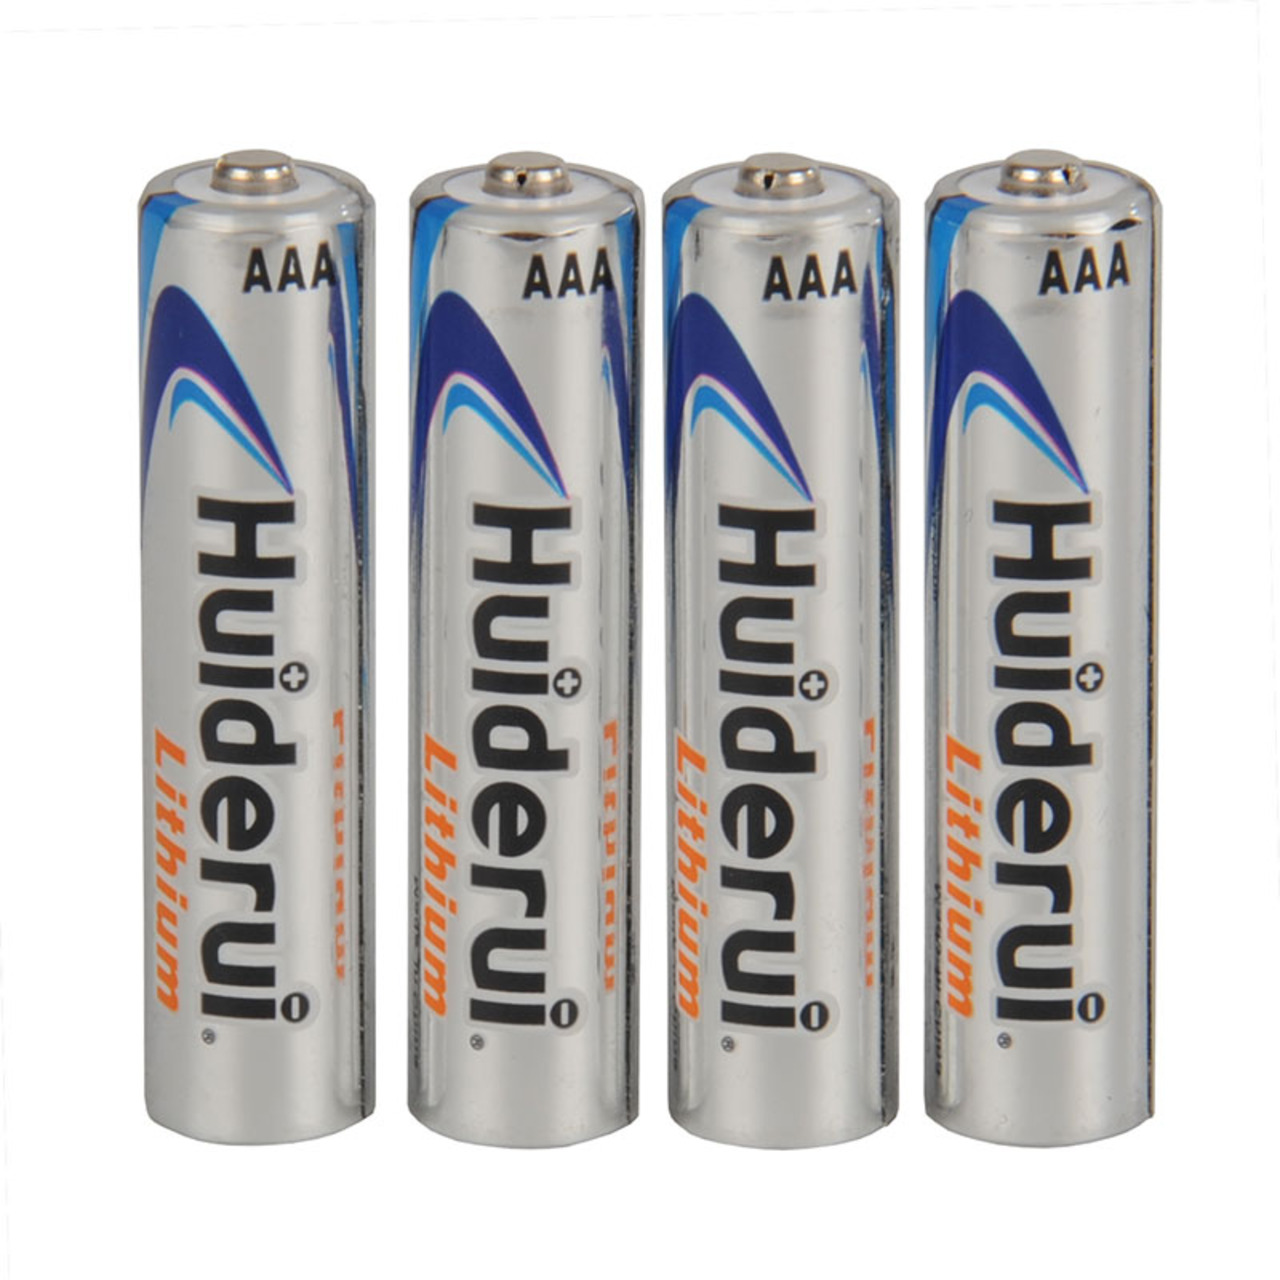 Huiderui Lithium Batterie Micro AAA- 4er Pack